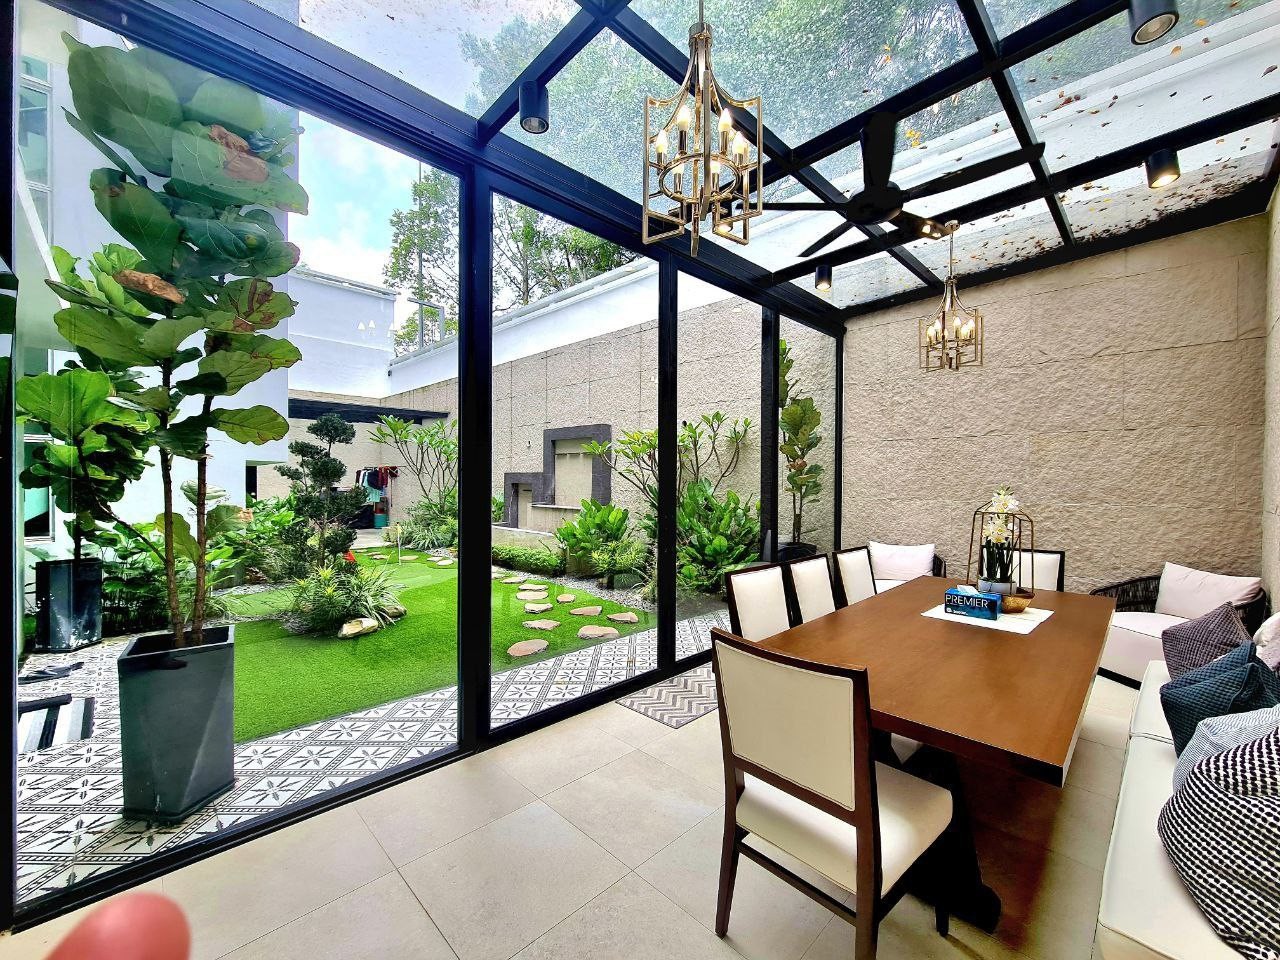 2 MILLION FULLY RENOVATED 3.5 Storey Twin Courtyard Villa Terrace House Contours Taman Melawati Selangor